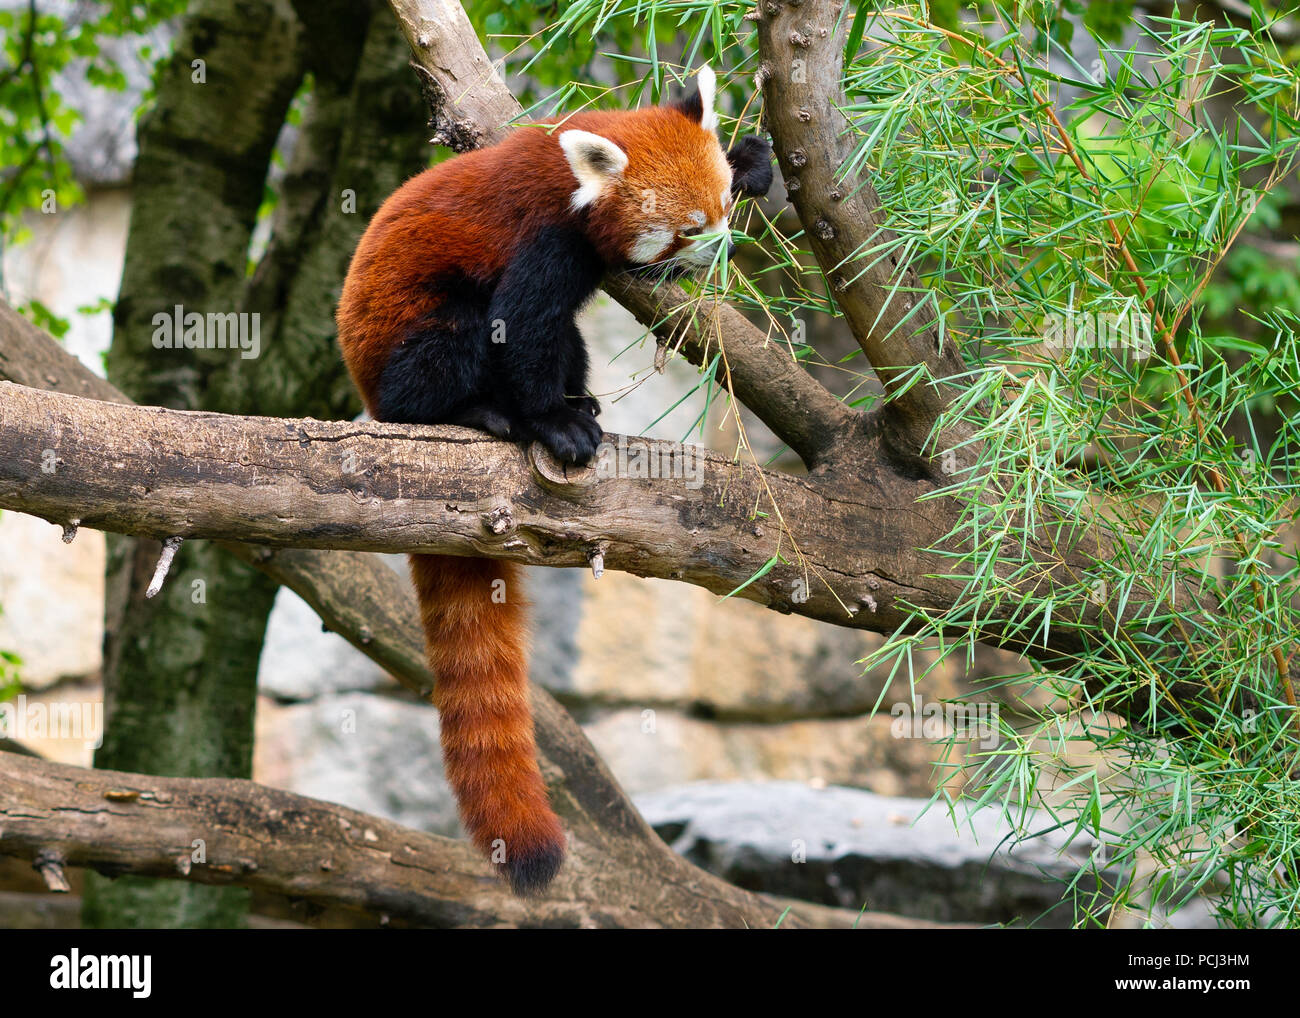 Red panda Ailurus fulgens or lesser panda eating bamboo leaves on tree branch Stock Photo